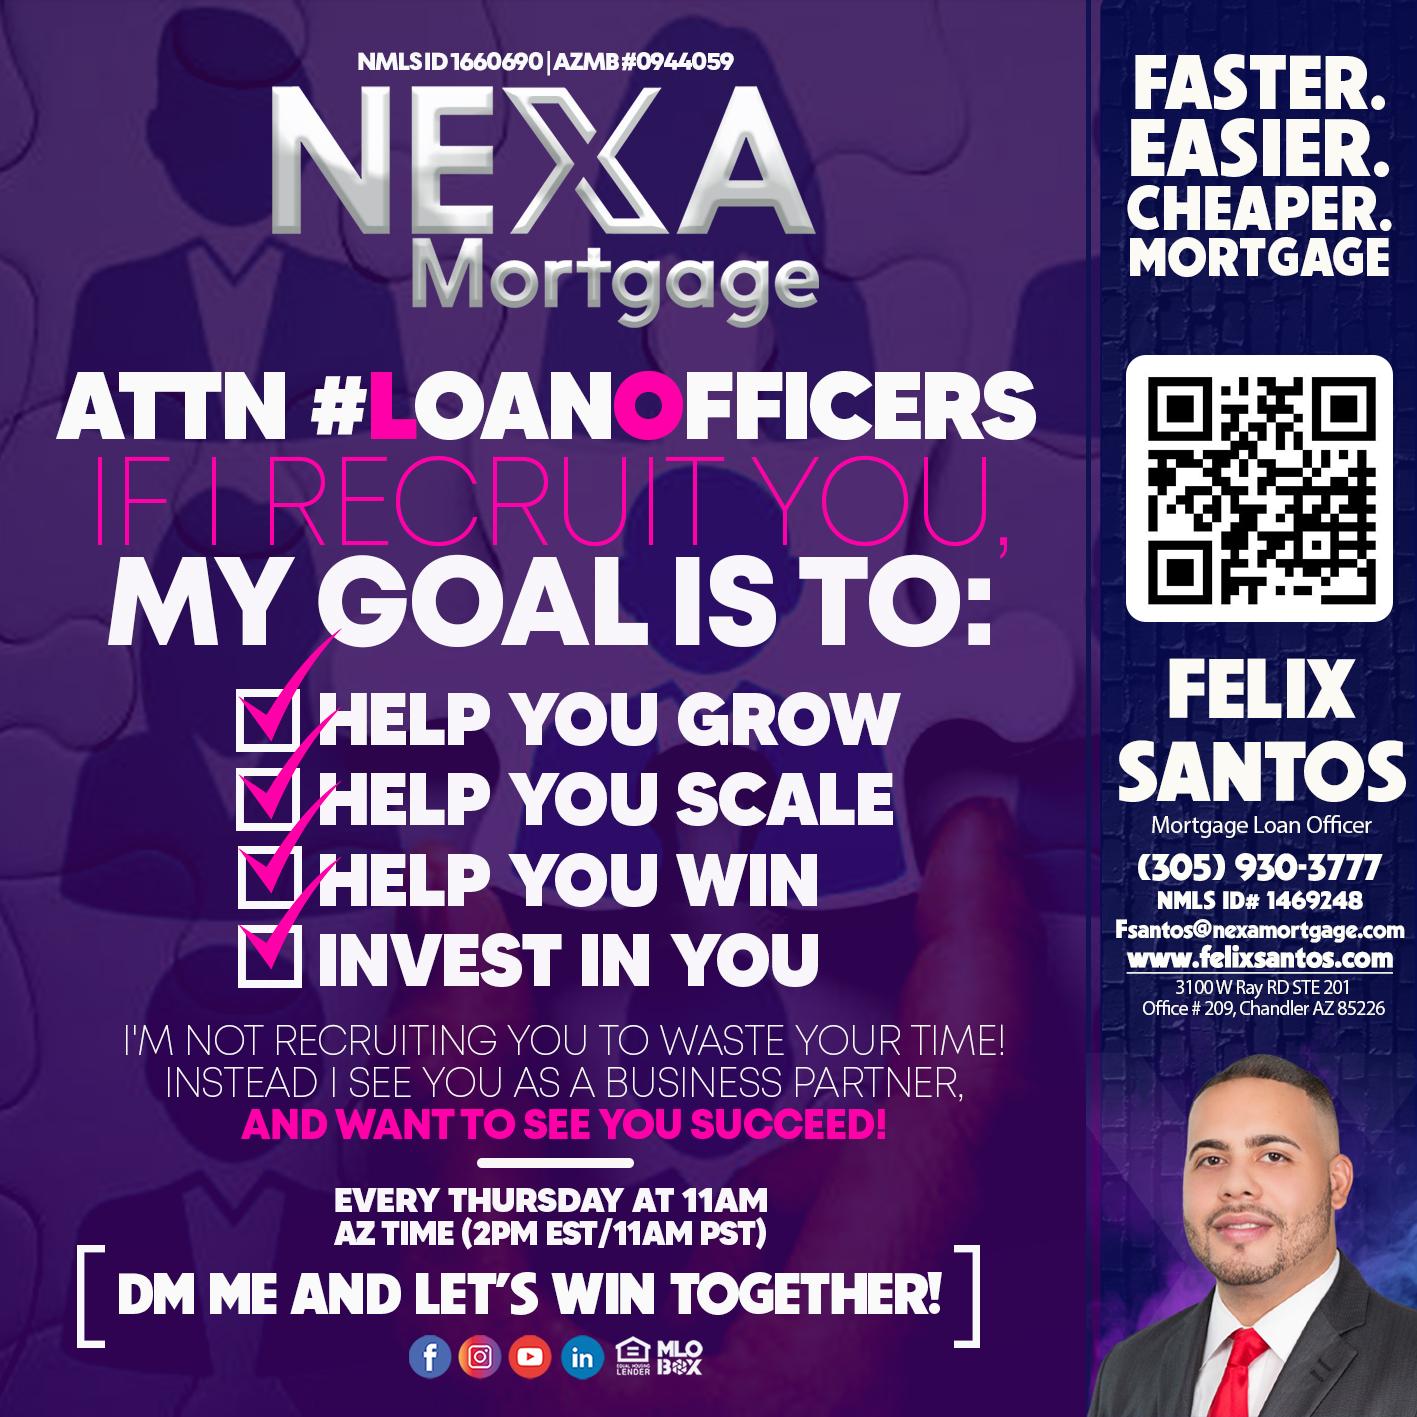 RECRUIT - Felix Santos -Mortgage Loan Officer